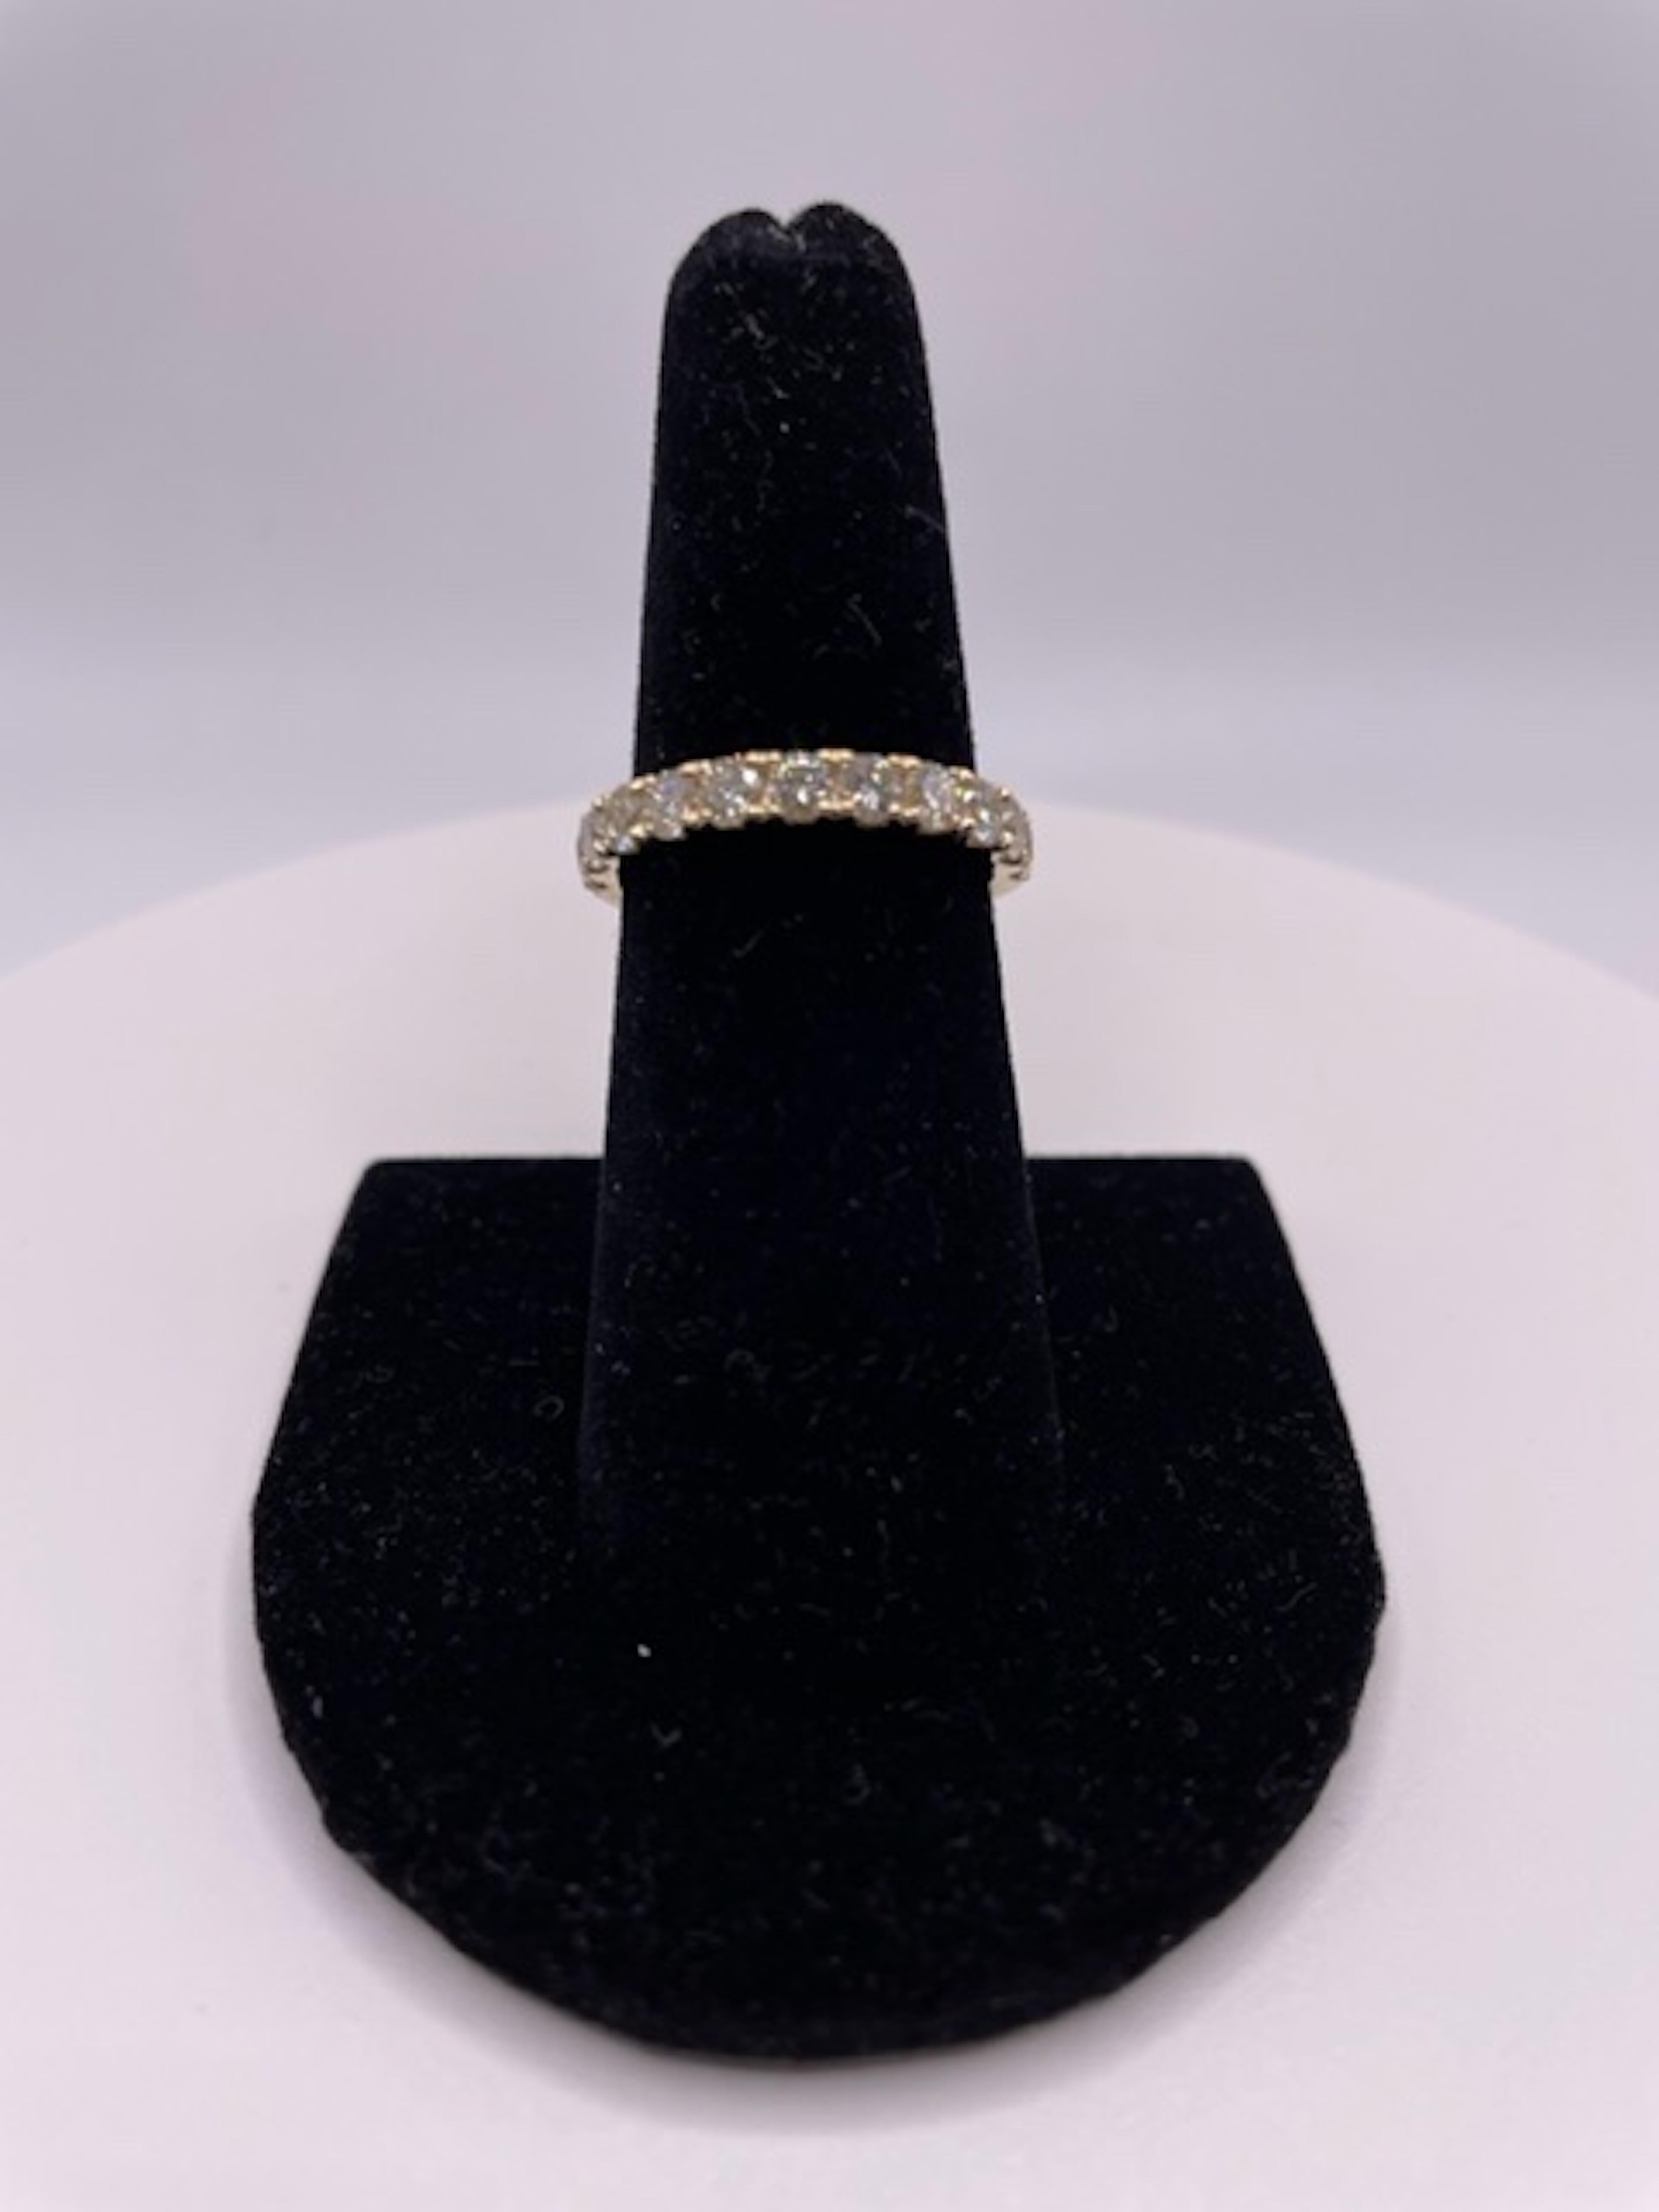 Beautiful 14K Yellow Gold Diamond Band Ring.
Total Diamod: 1.20ct
Color: HI
Clarity: SI-2-I1
US Size: 7